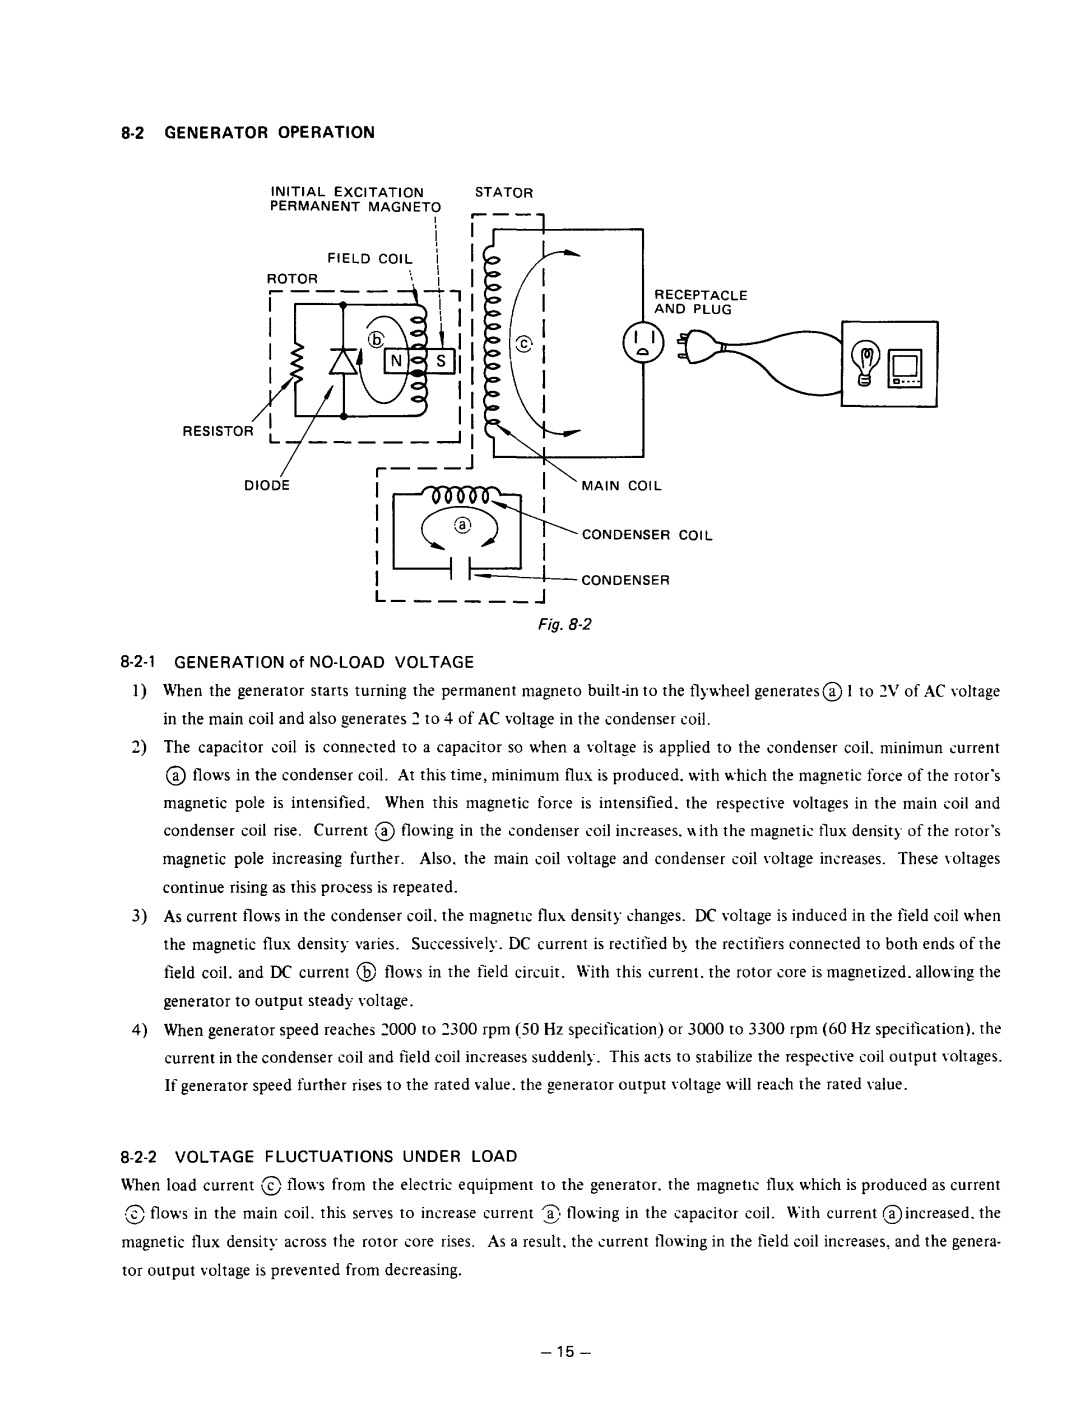 Subaru Robin Power Products R600 manual Generator Operation, L ------A, 2-lGENERATION of NO-LOADVOLTAGE 